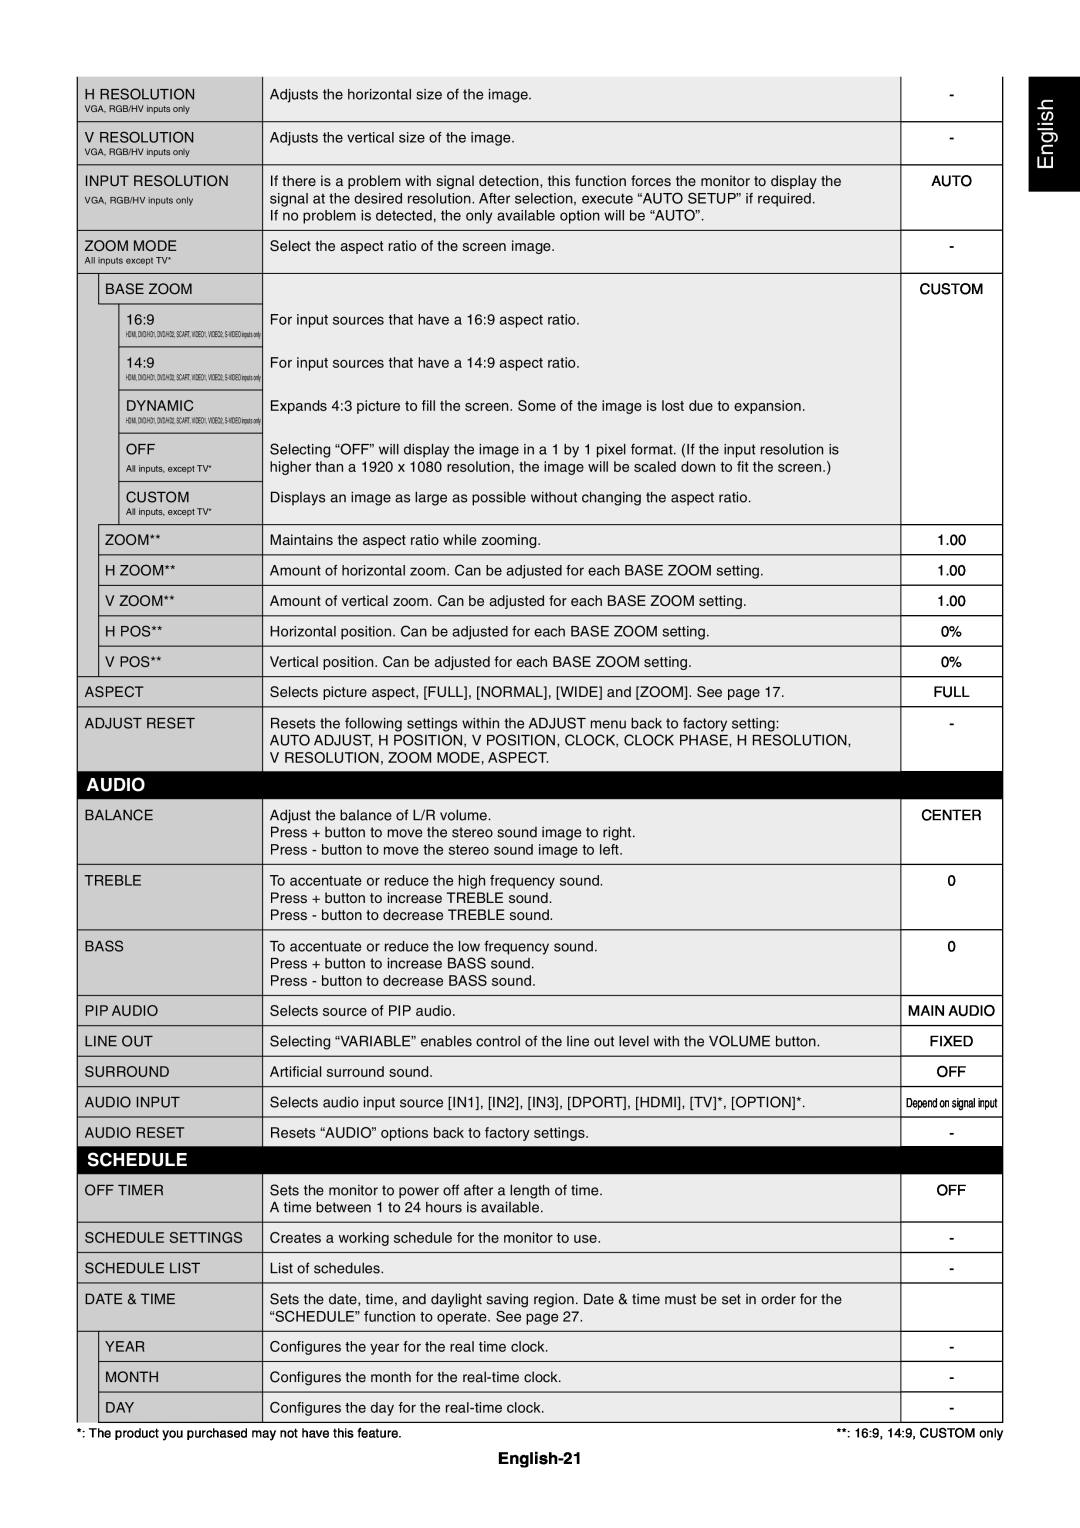 NEC MULTISYNC X462HB user manual Audio, Schedule, English-21 